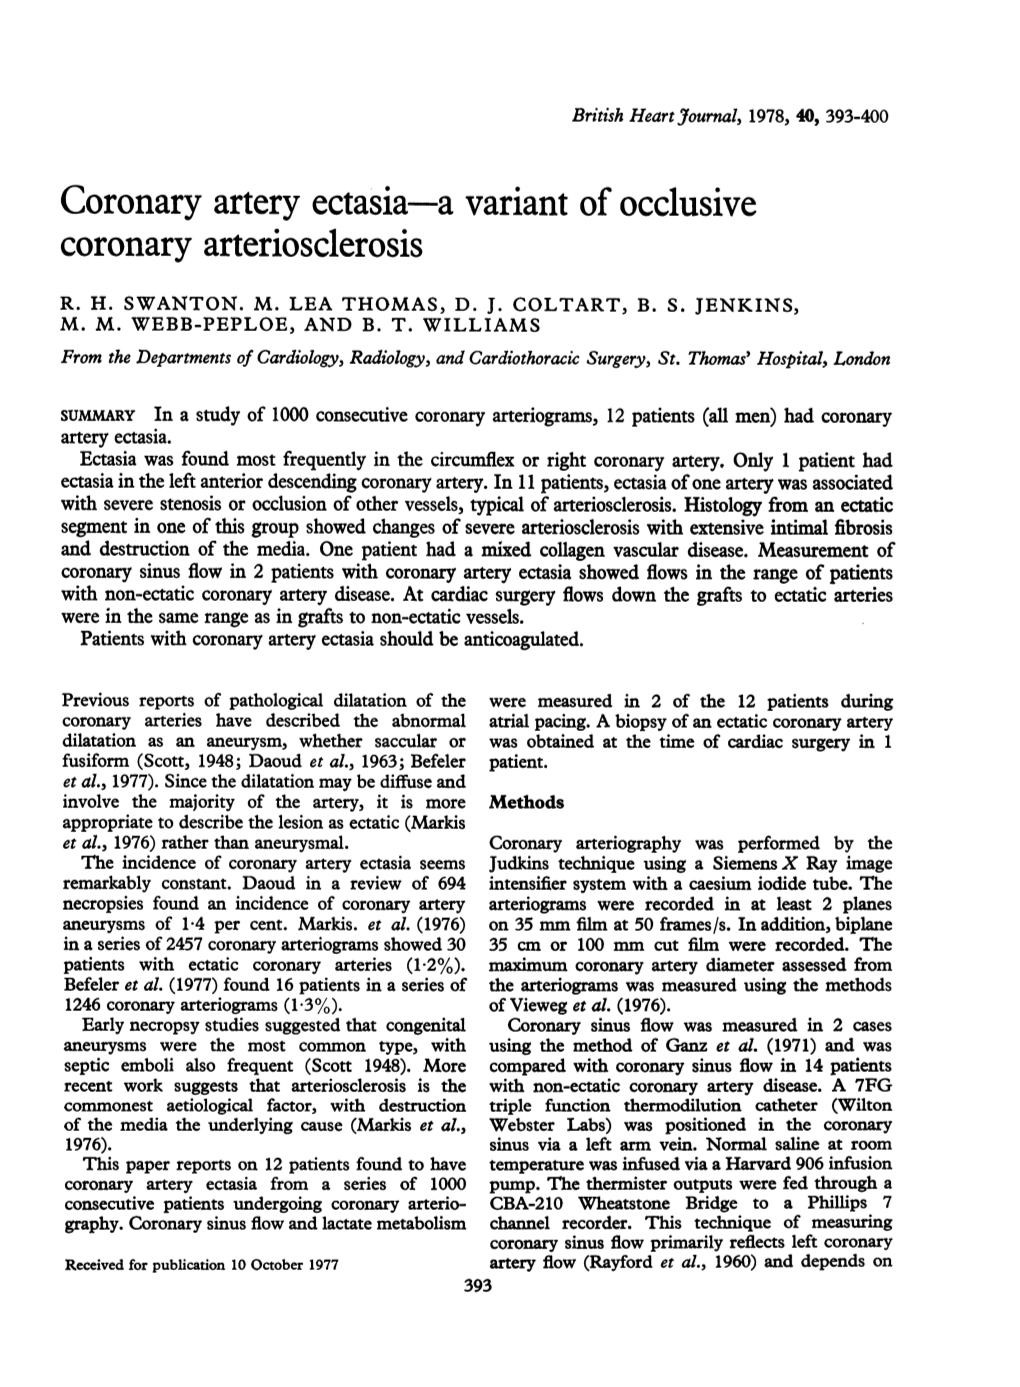 Coronary Artery Ectasia-A Variant of Occlusive Coronary Arteriosclerosis